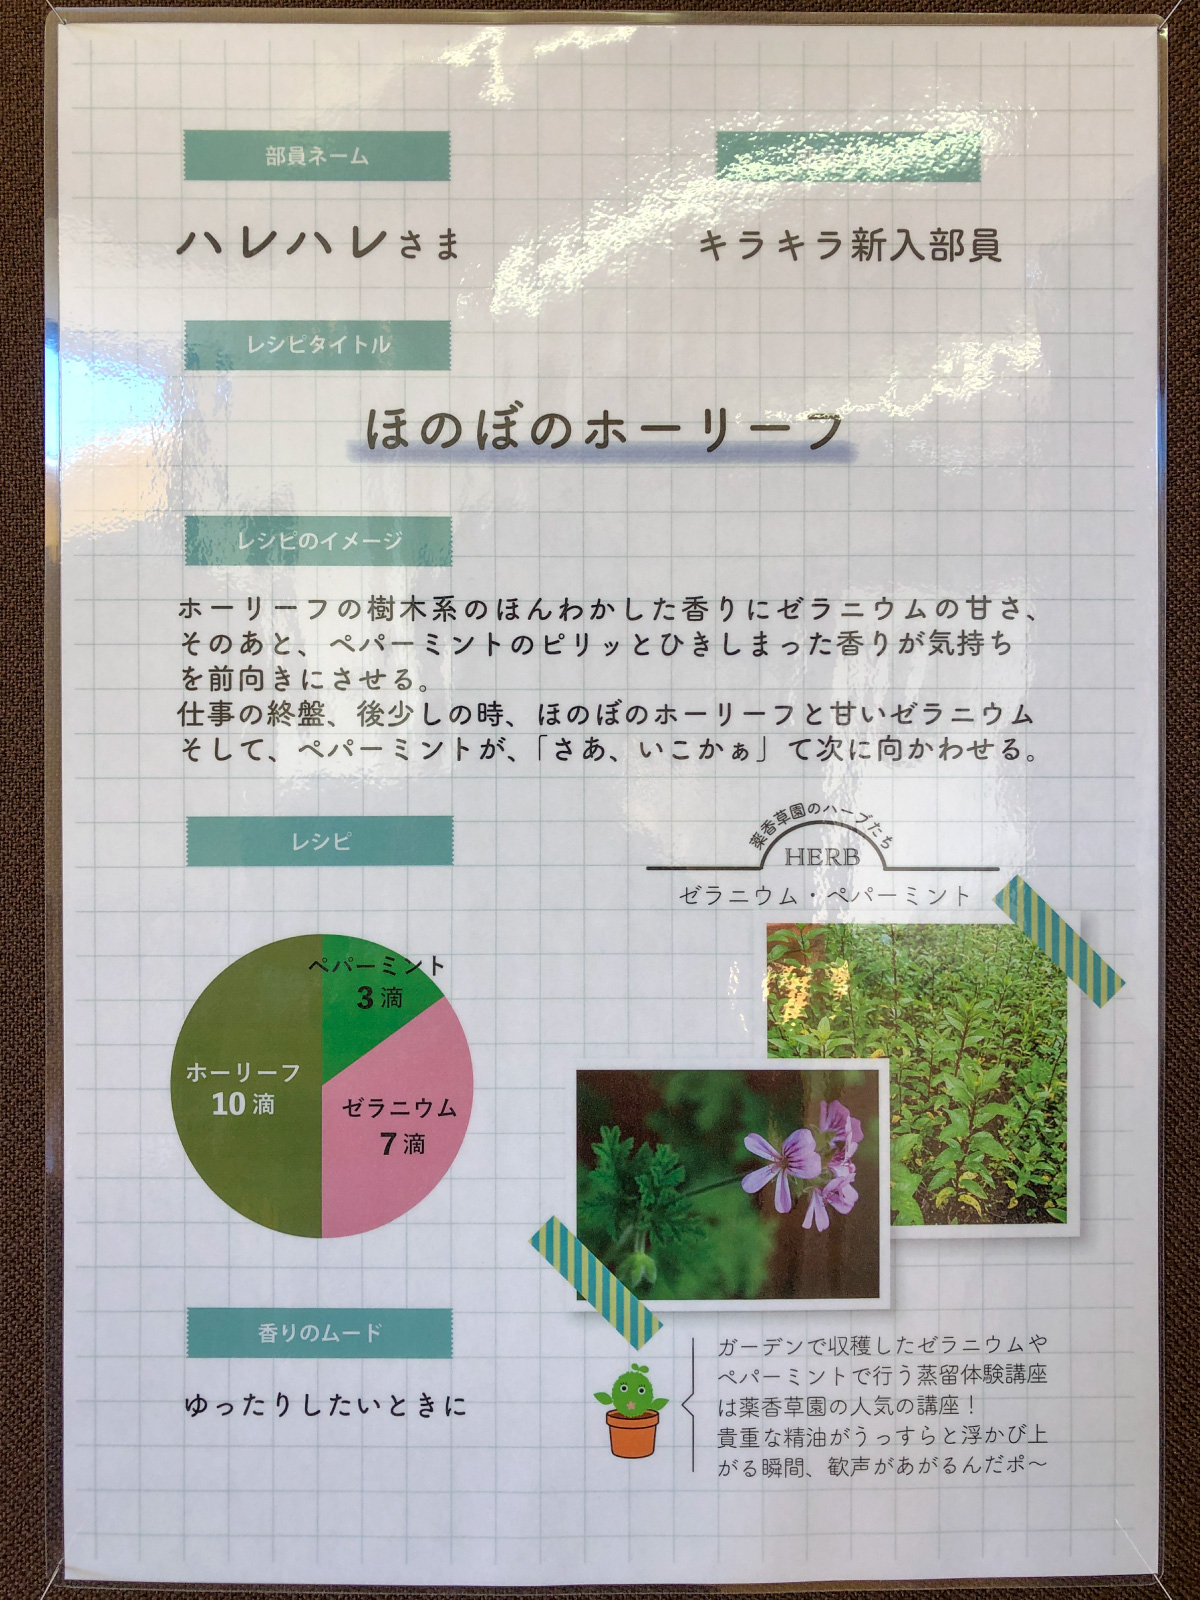 https://www.treeoflife.co.jp/library/aromabu/images/poster_3_harehare.jpg